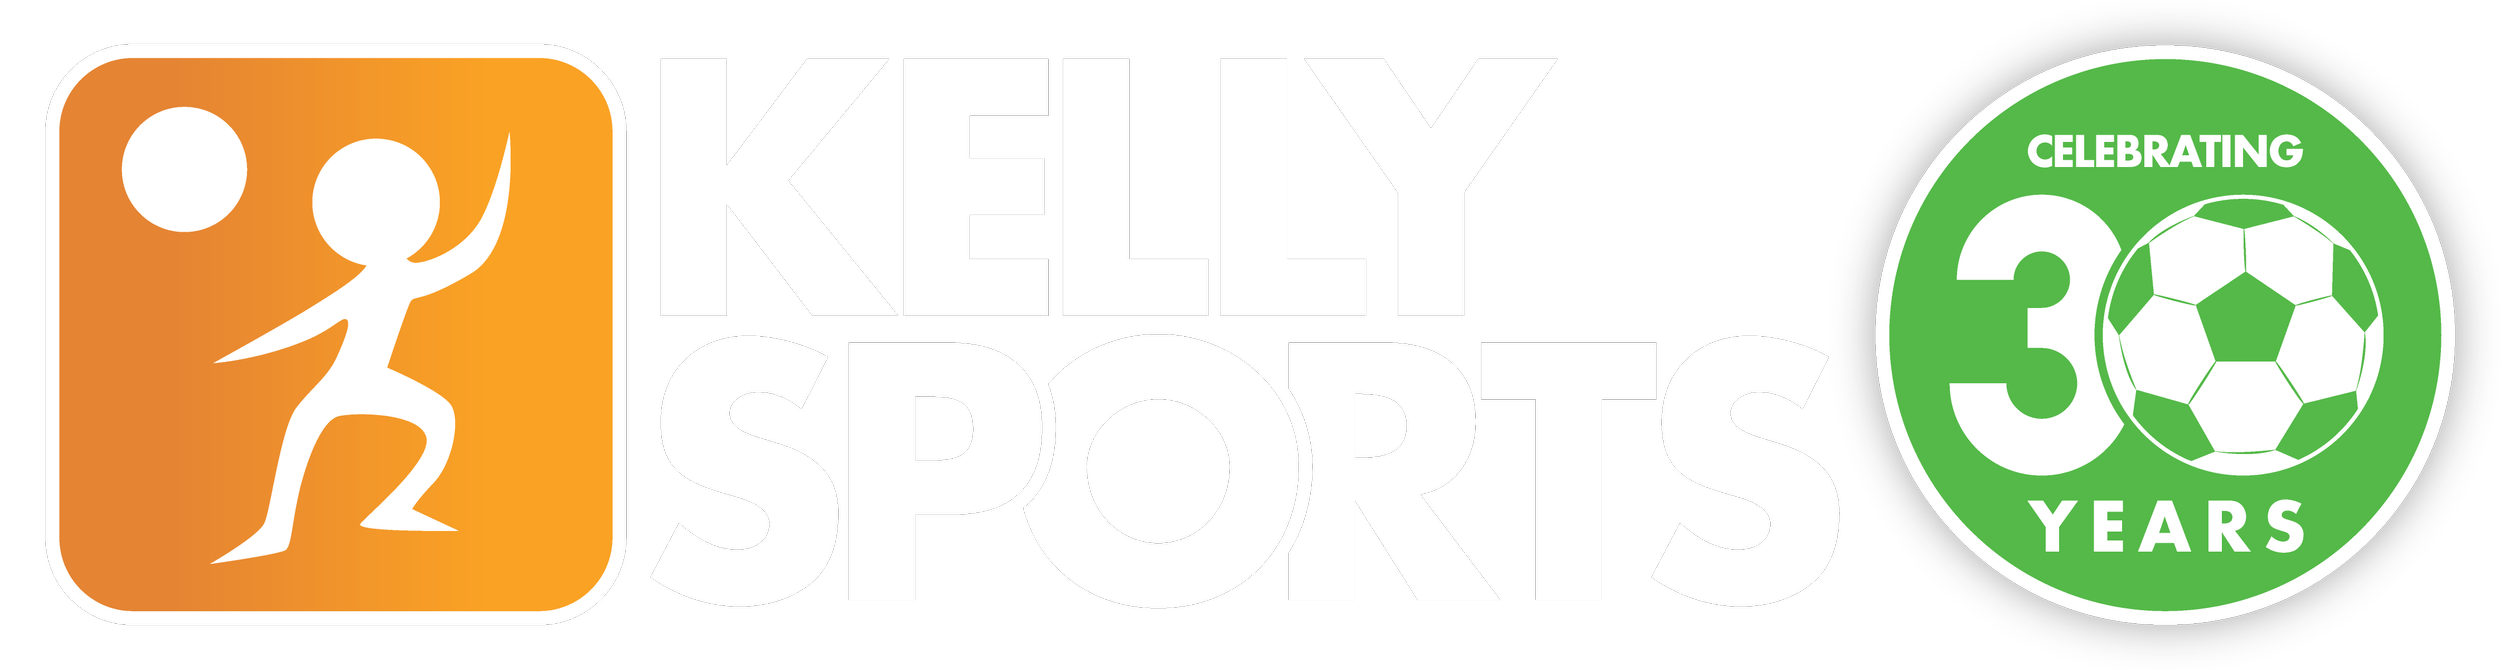 Kelly Sports Australia - A guide for Preschools